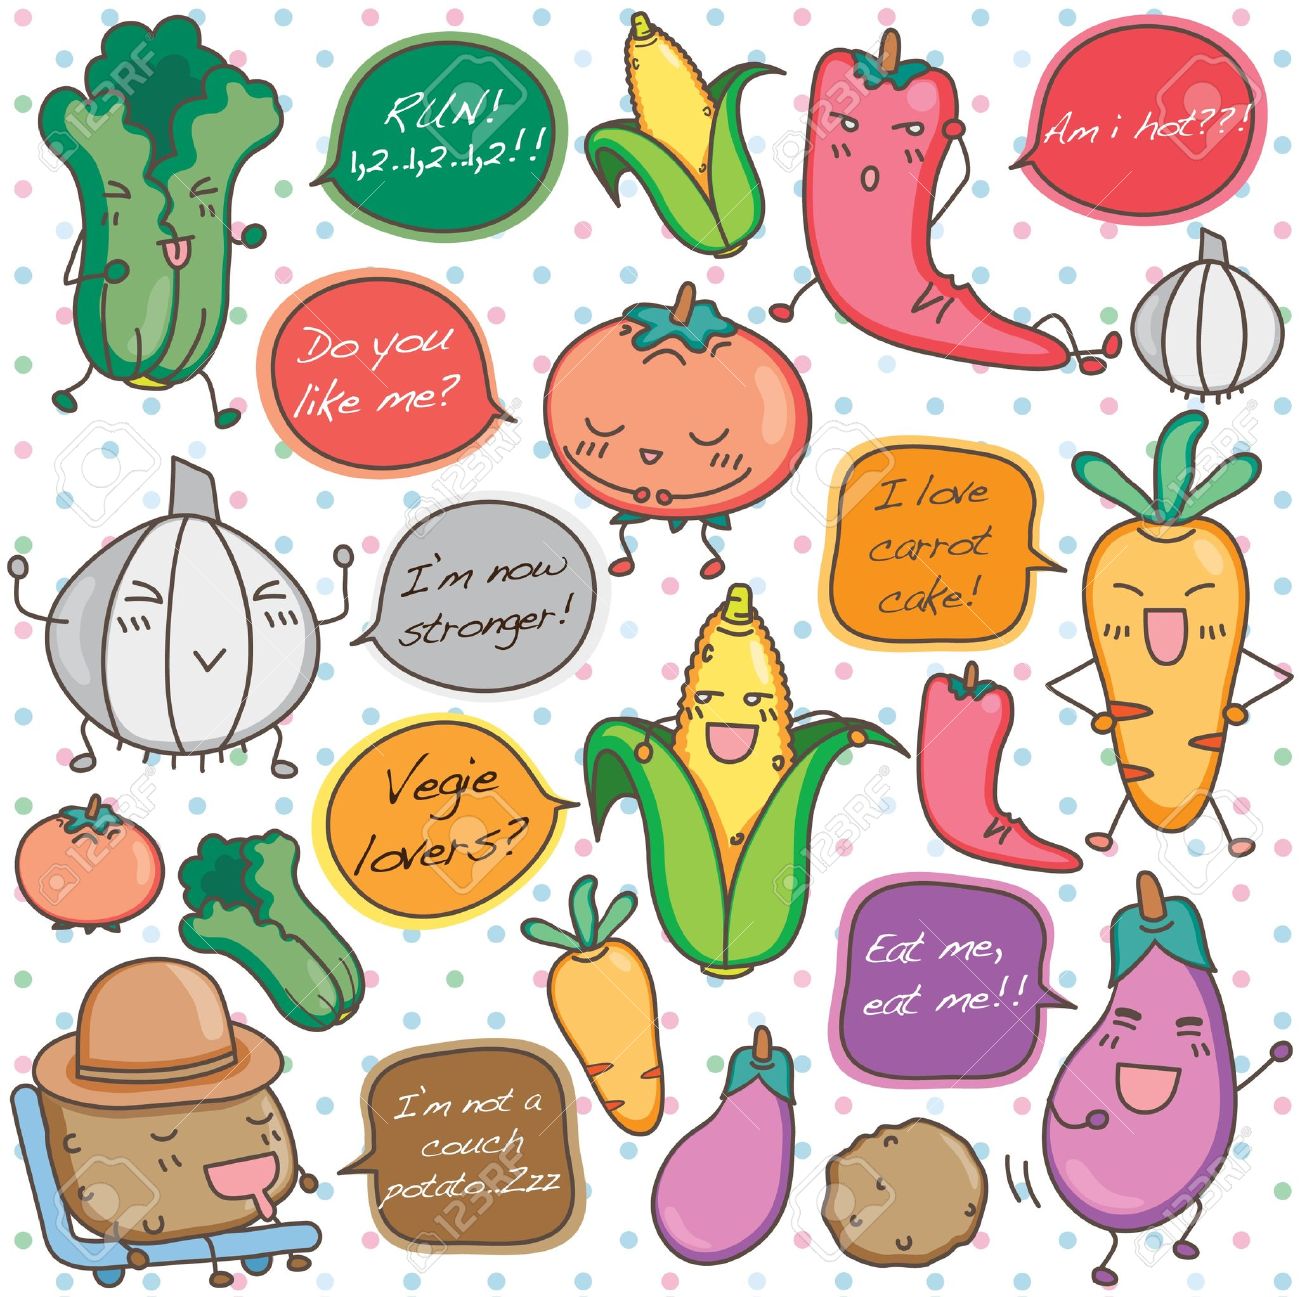 Cute Healthy Food Cartoon Images - Healthy Food Recipes